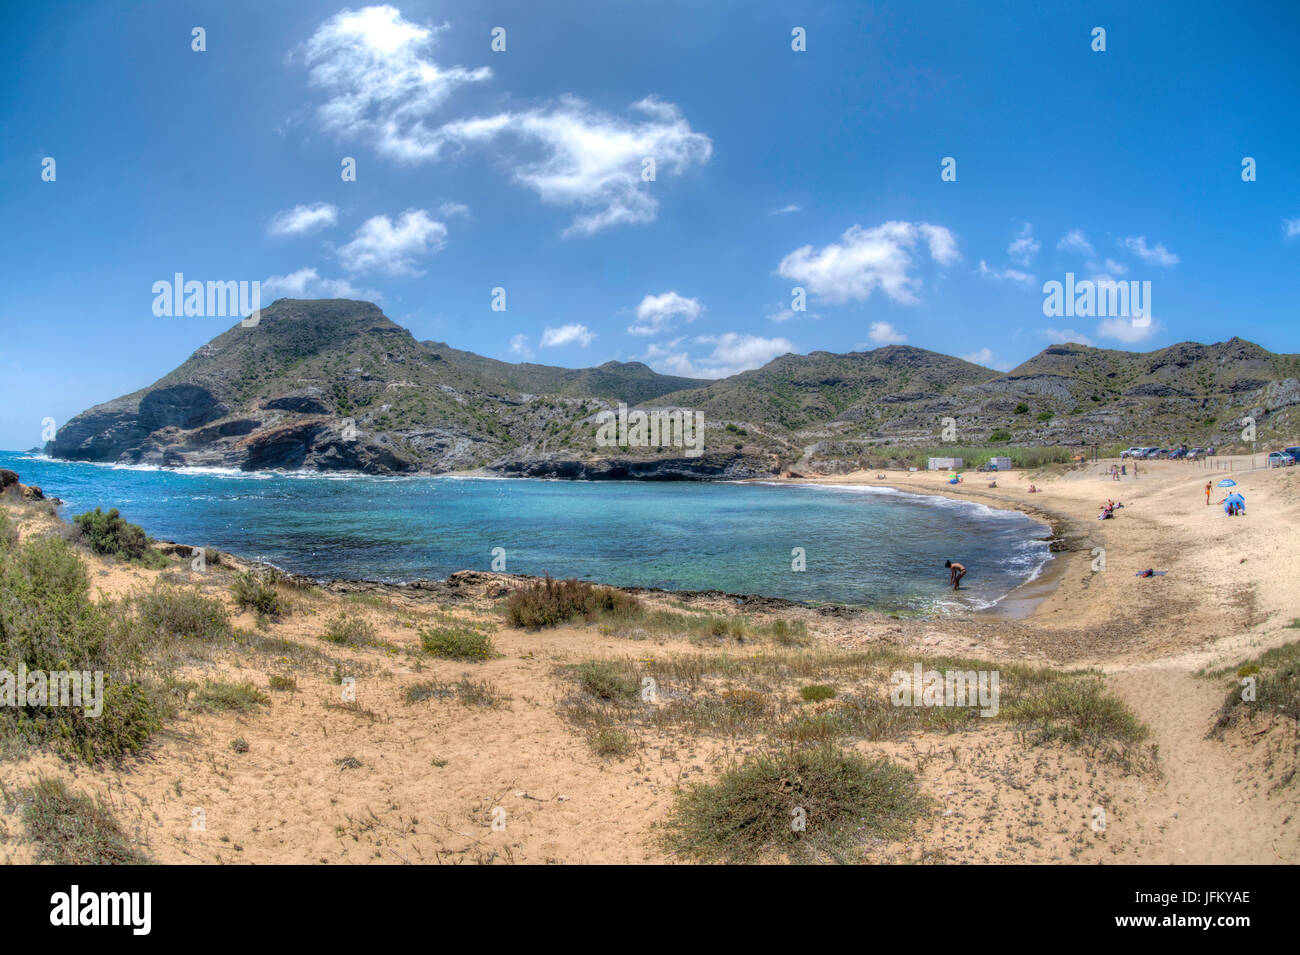 HDR Fisheye image of the Beach at Cala Reona in Murcia Spain Stock Photo